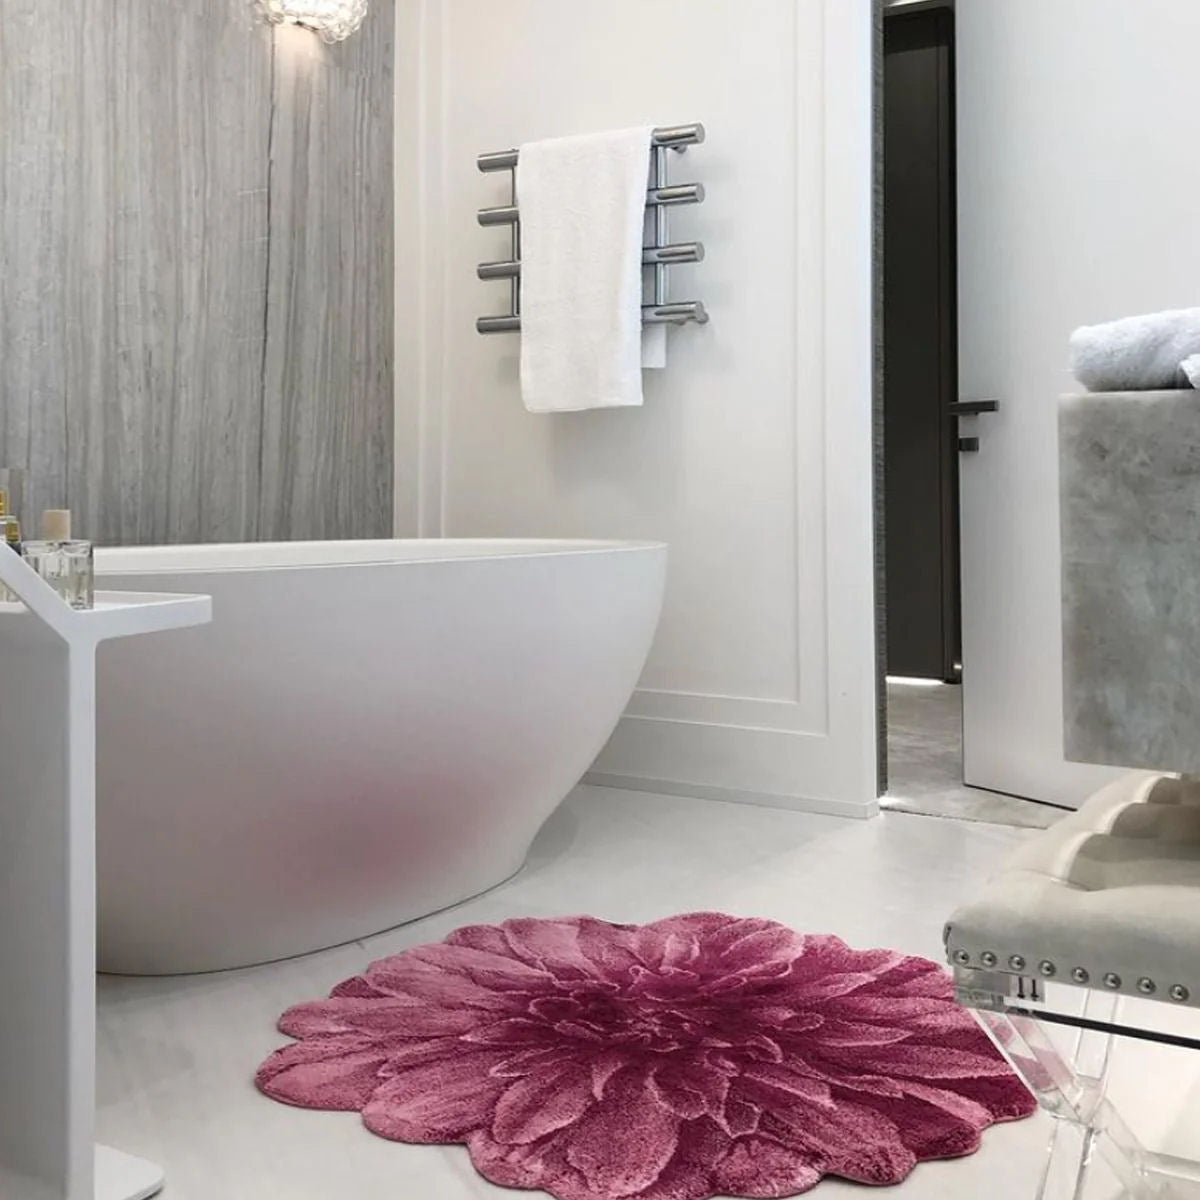 Dahlia Luxury Bathroom Rug - |VESIMI Design| Luxury and Rustic bathrooms online